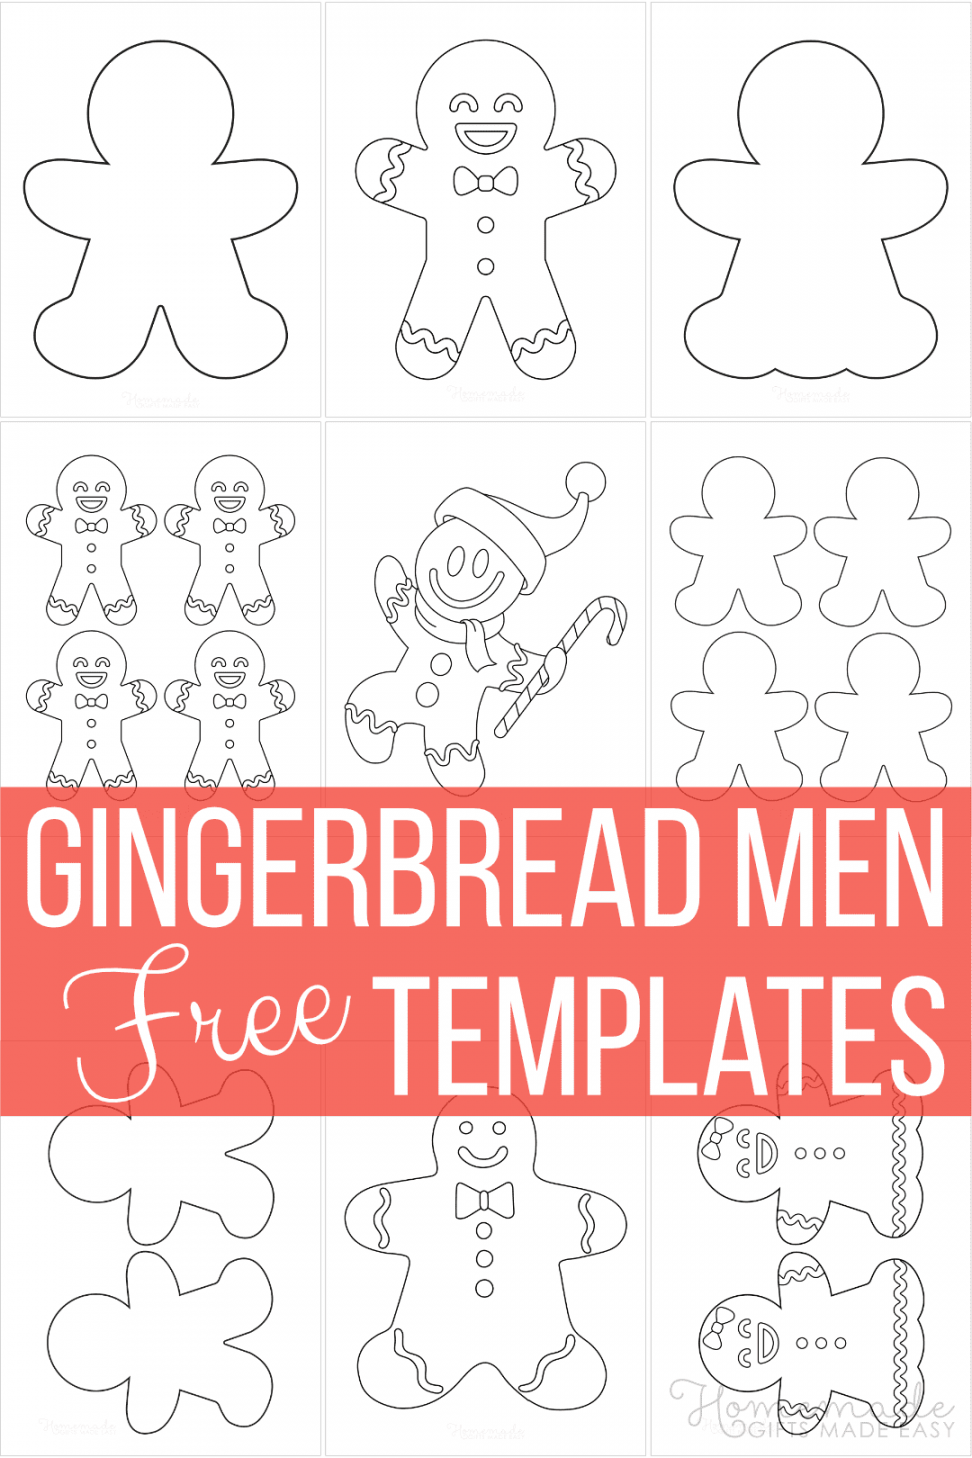 Free Printable Gingerbread Man Templates & Coloring Pages - FREE Printables - Gingerbread Printable